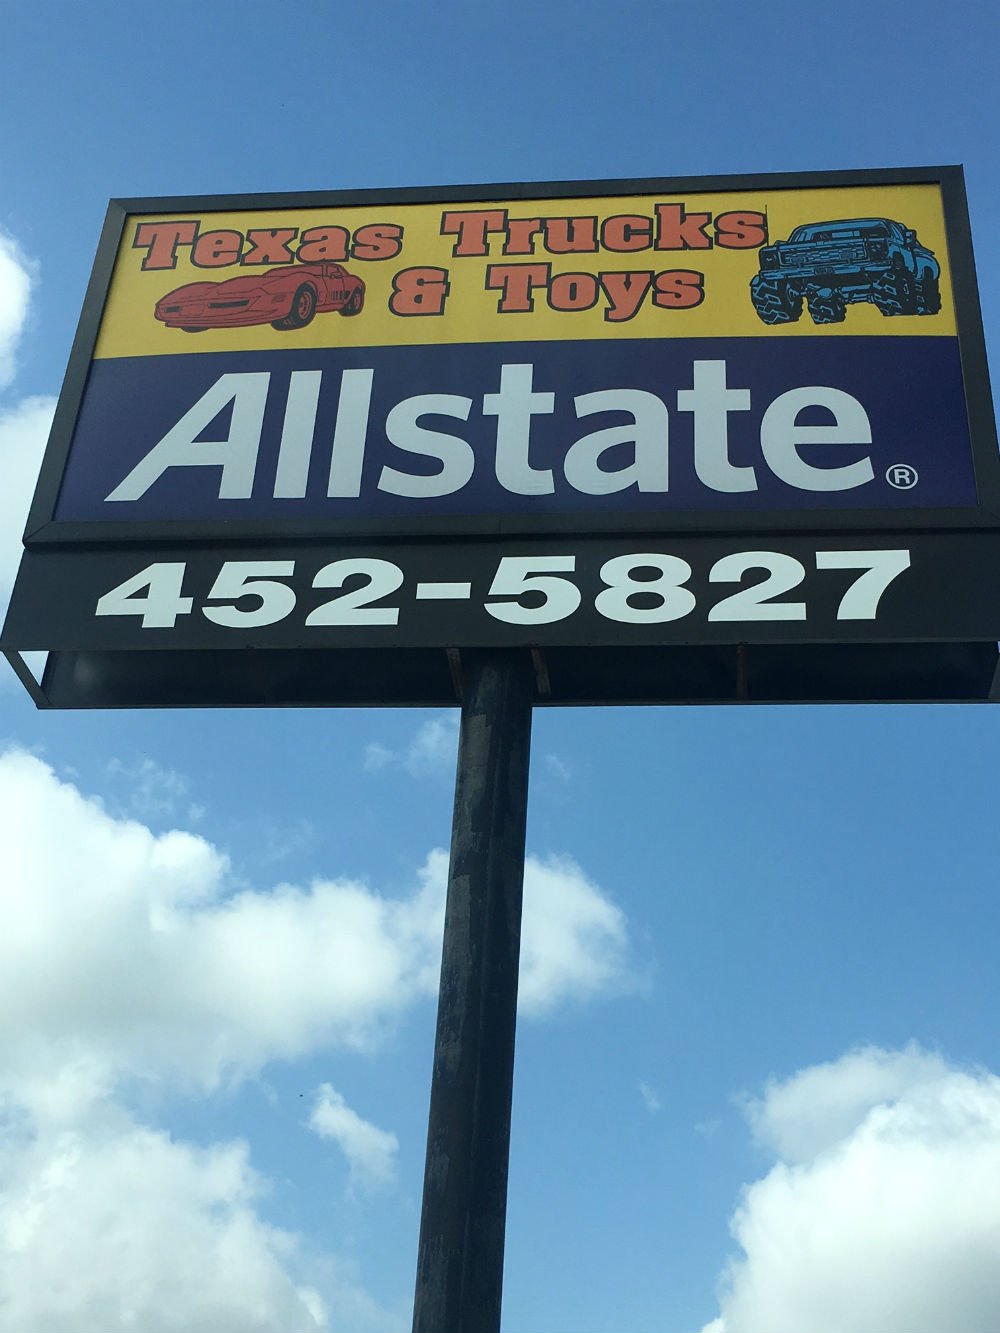 Allstate | Car Insurance in Austin, TX - Jim Phillips